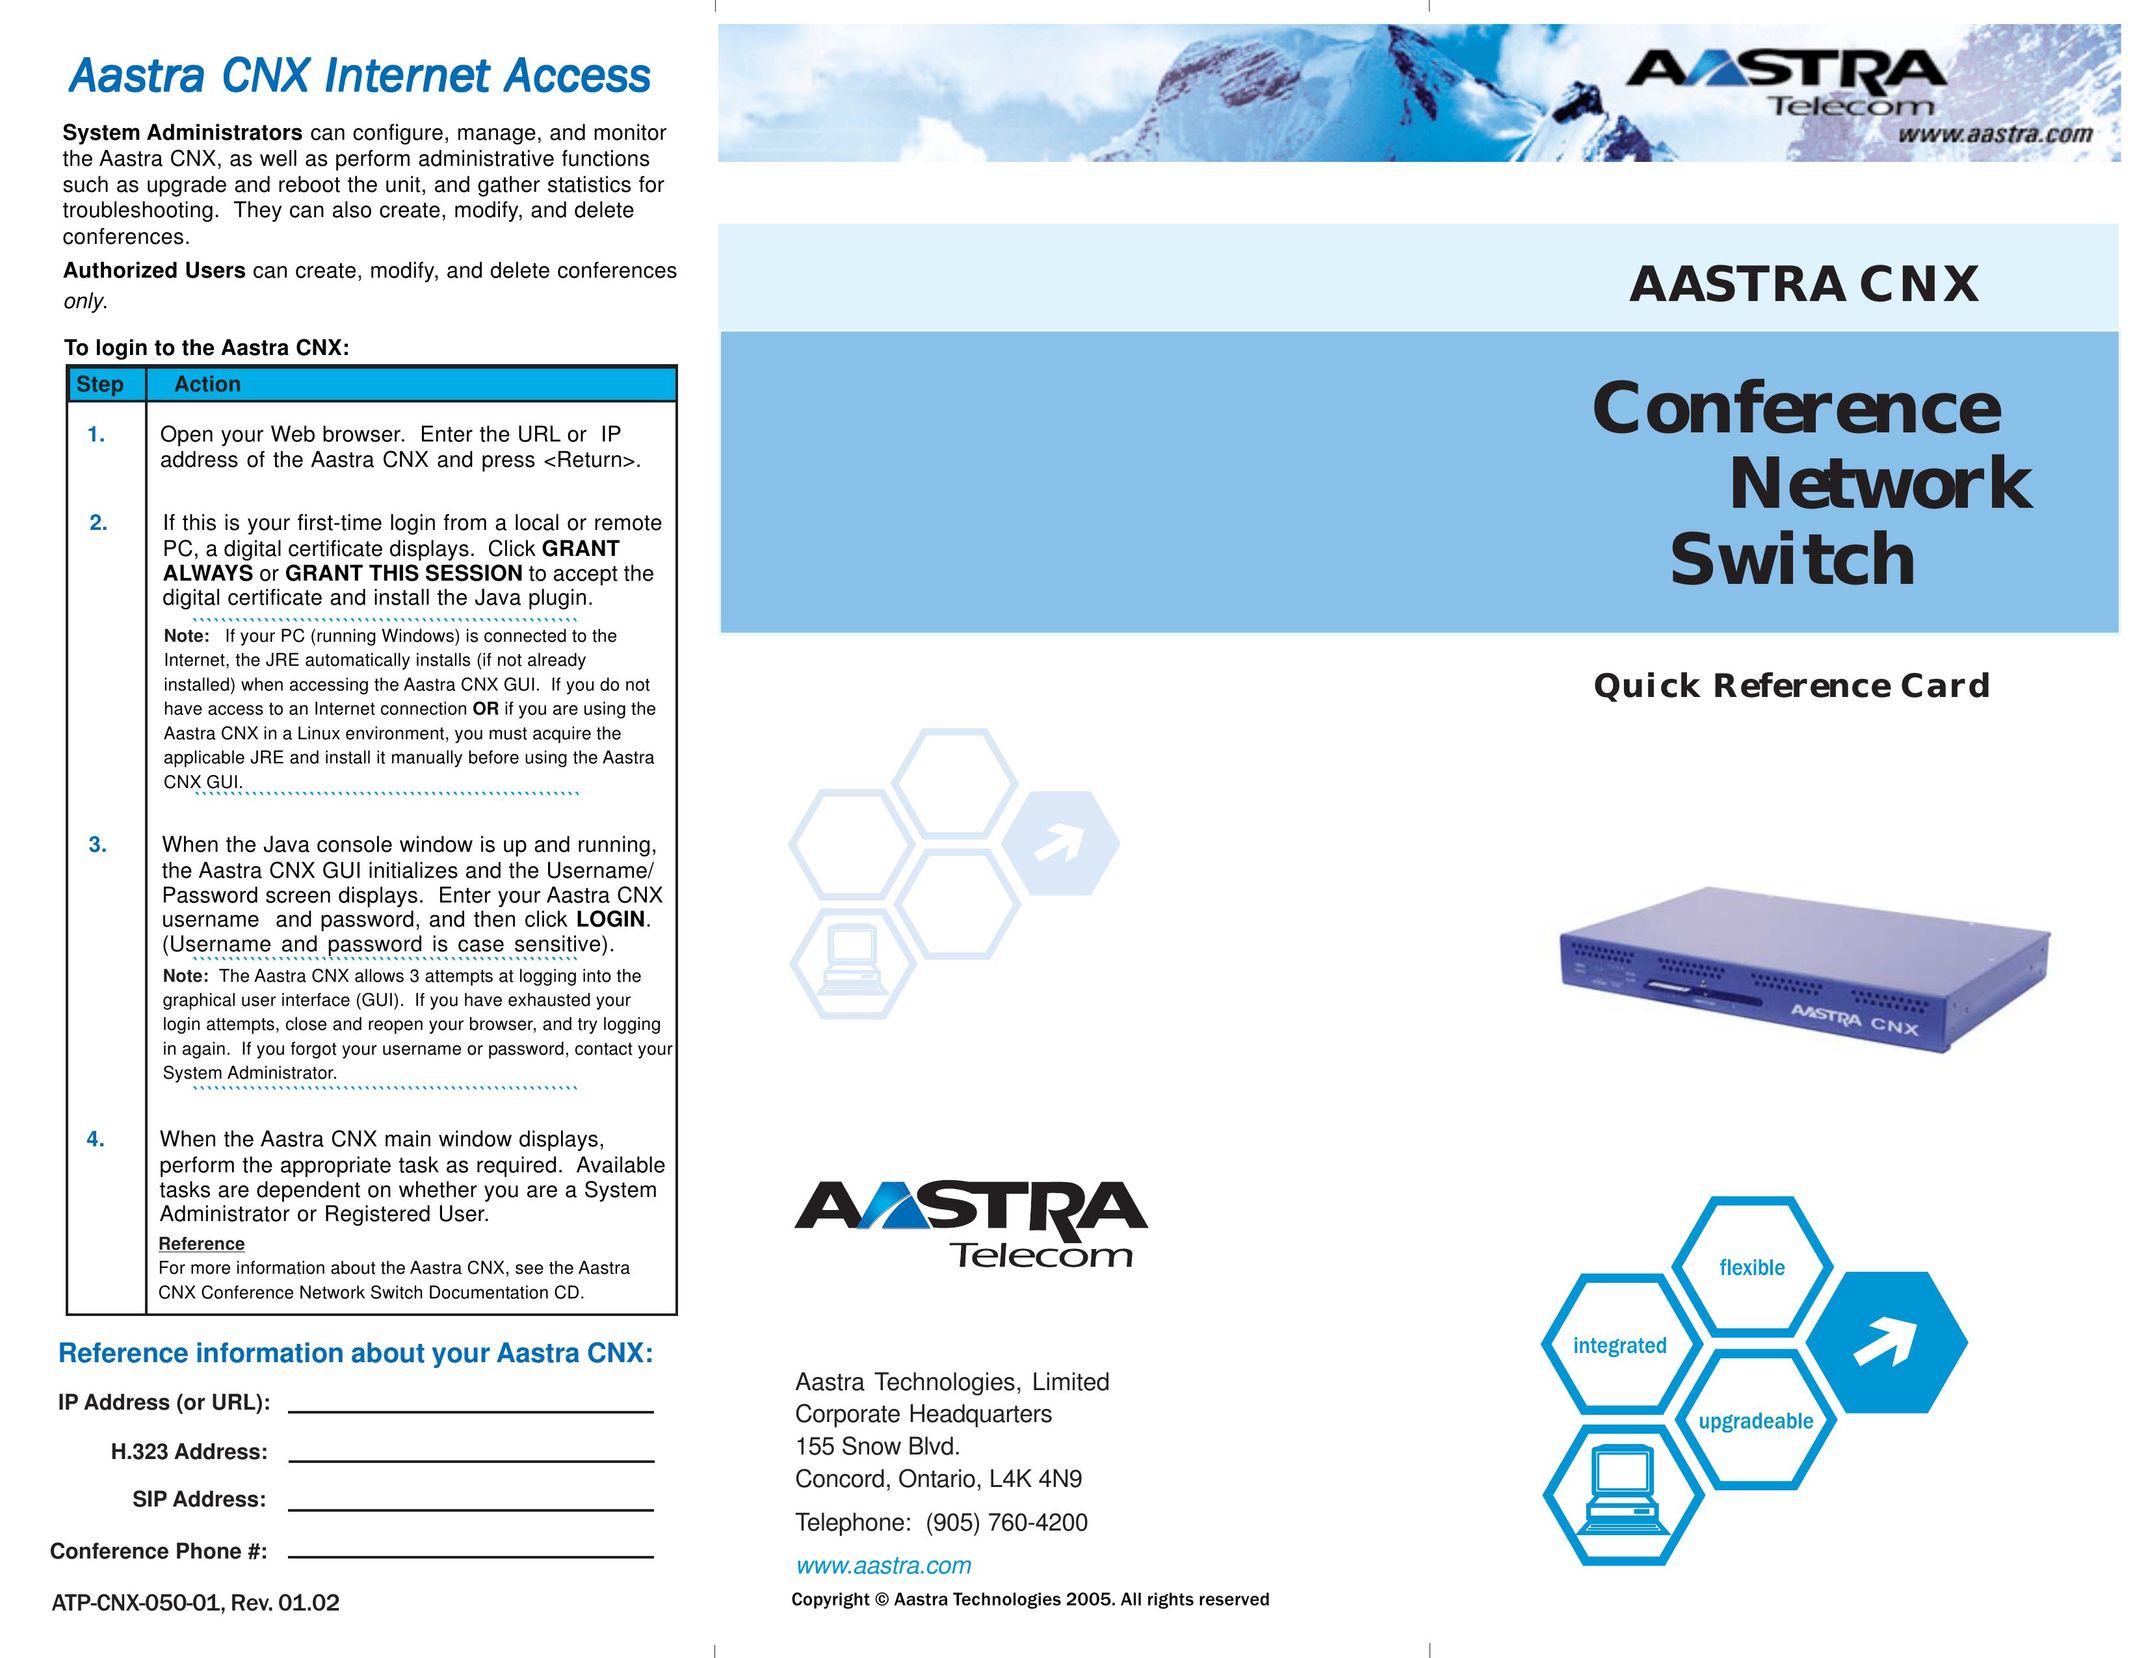 Aastra Telecom ATP-CNX-050-01 Switch User Manual